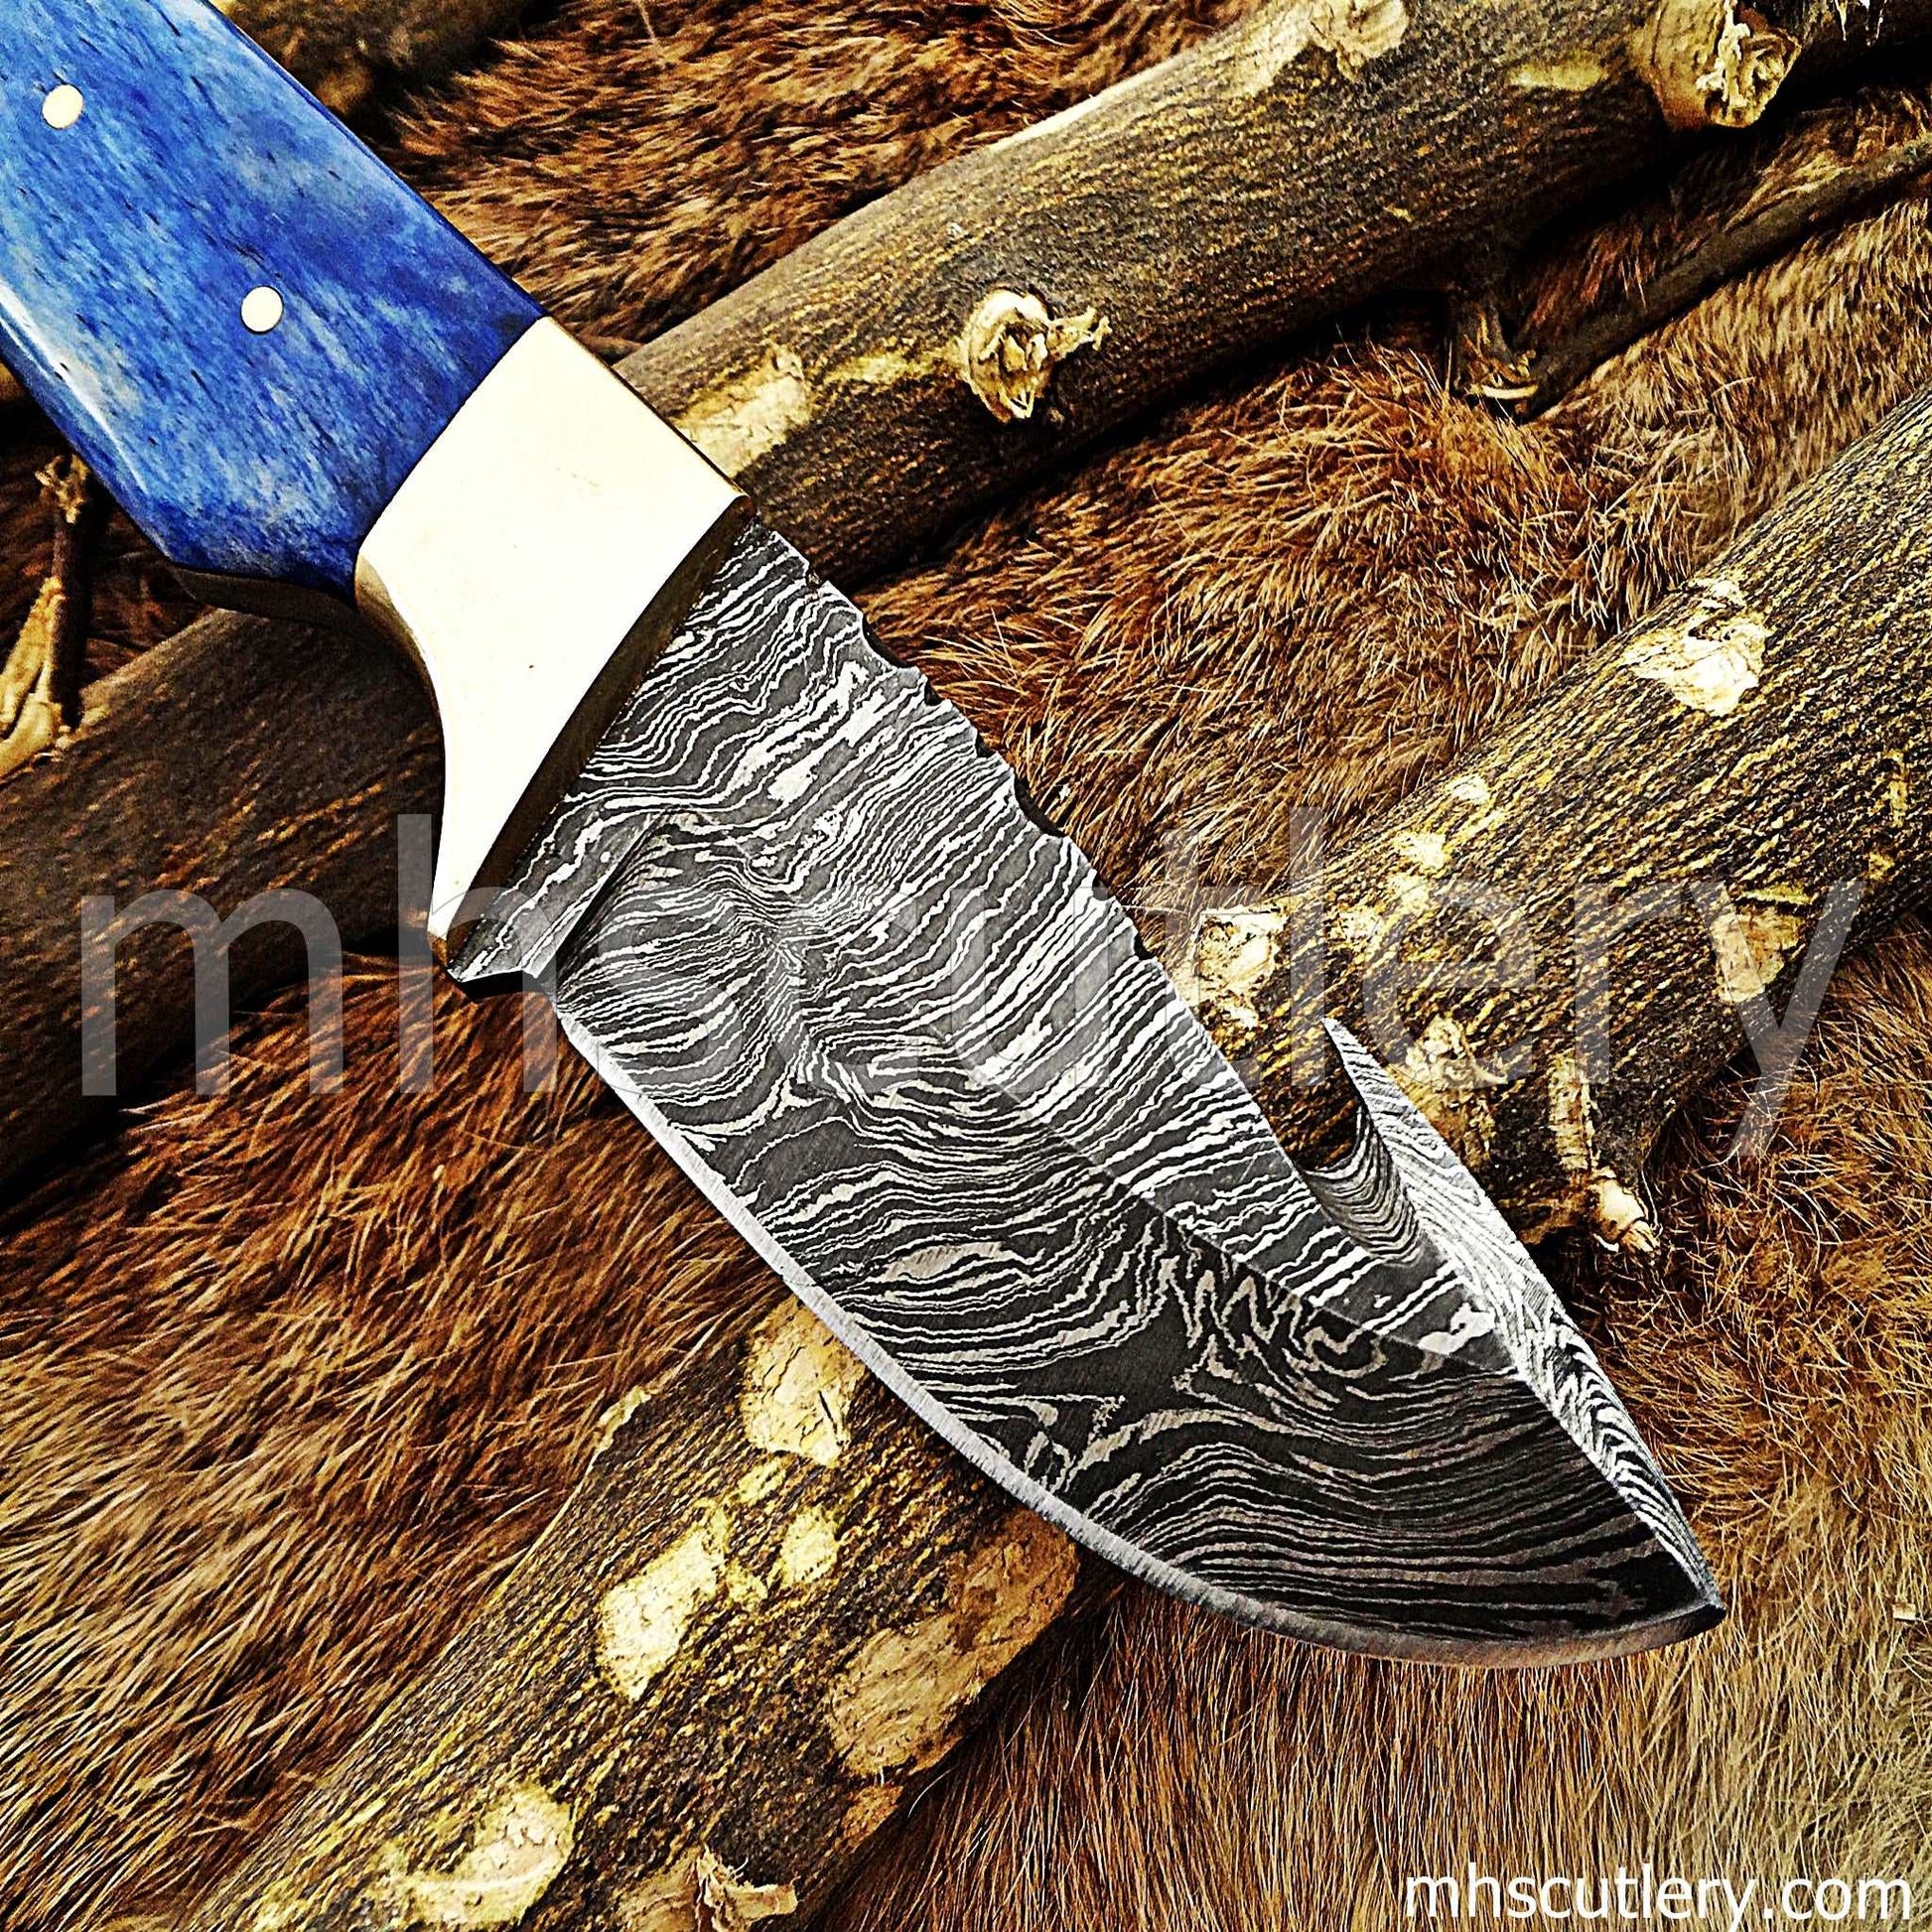 Custom Hand Forged Damascus Steel Gut Hook Hunter | mhscutlery